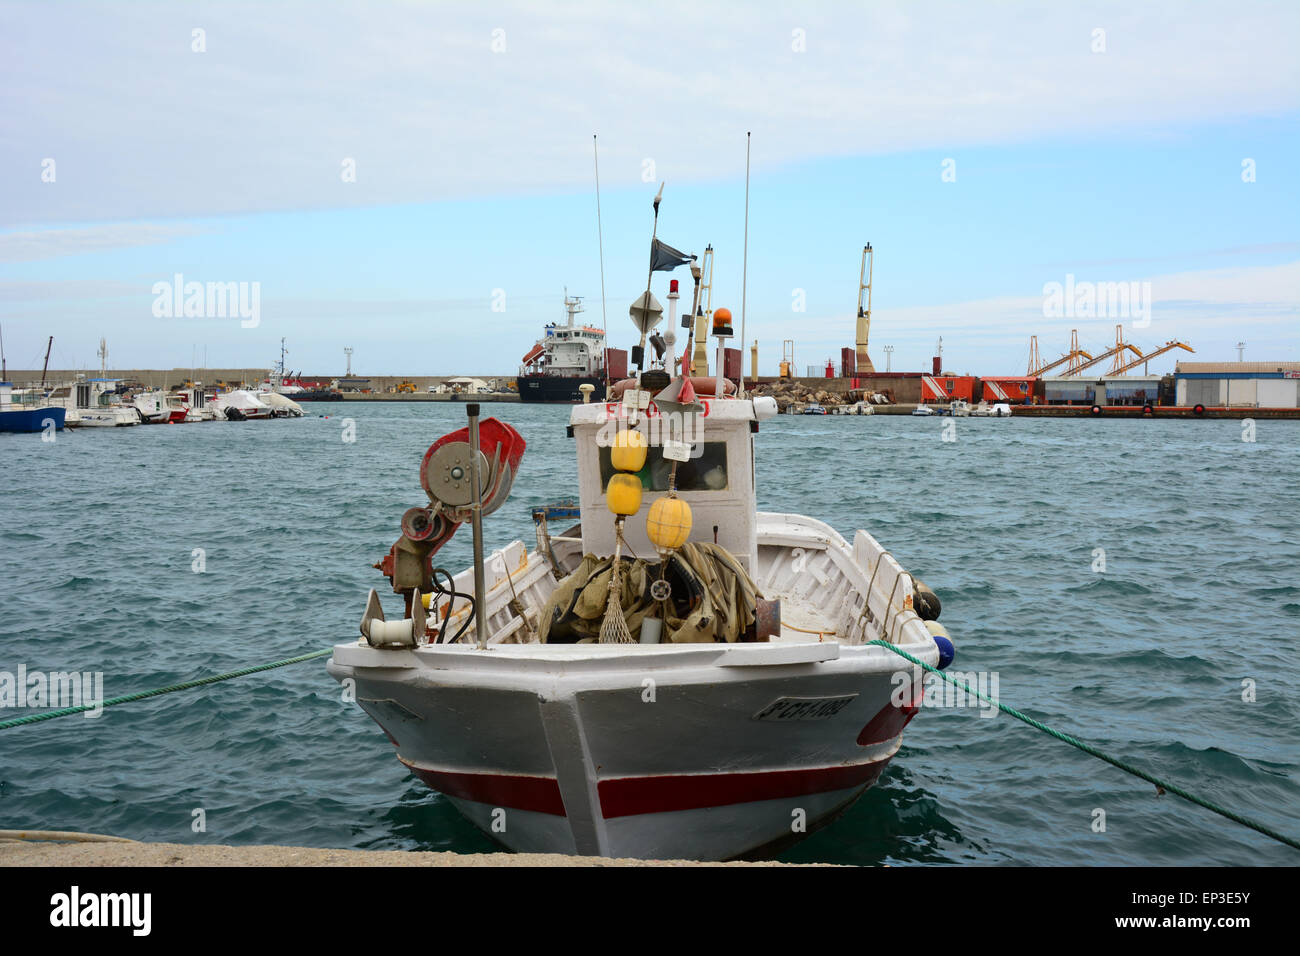 Pesquero, fishing boat Stock Photo